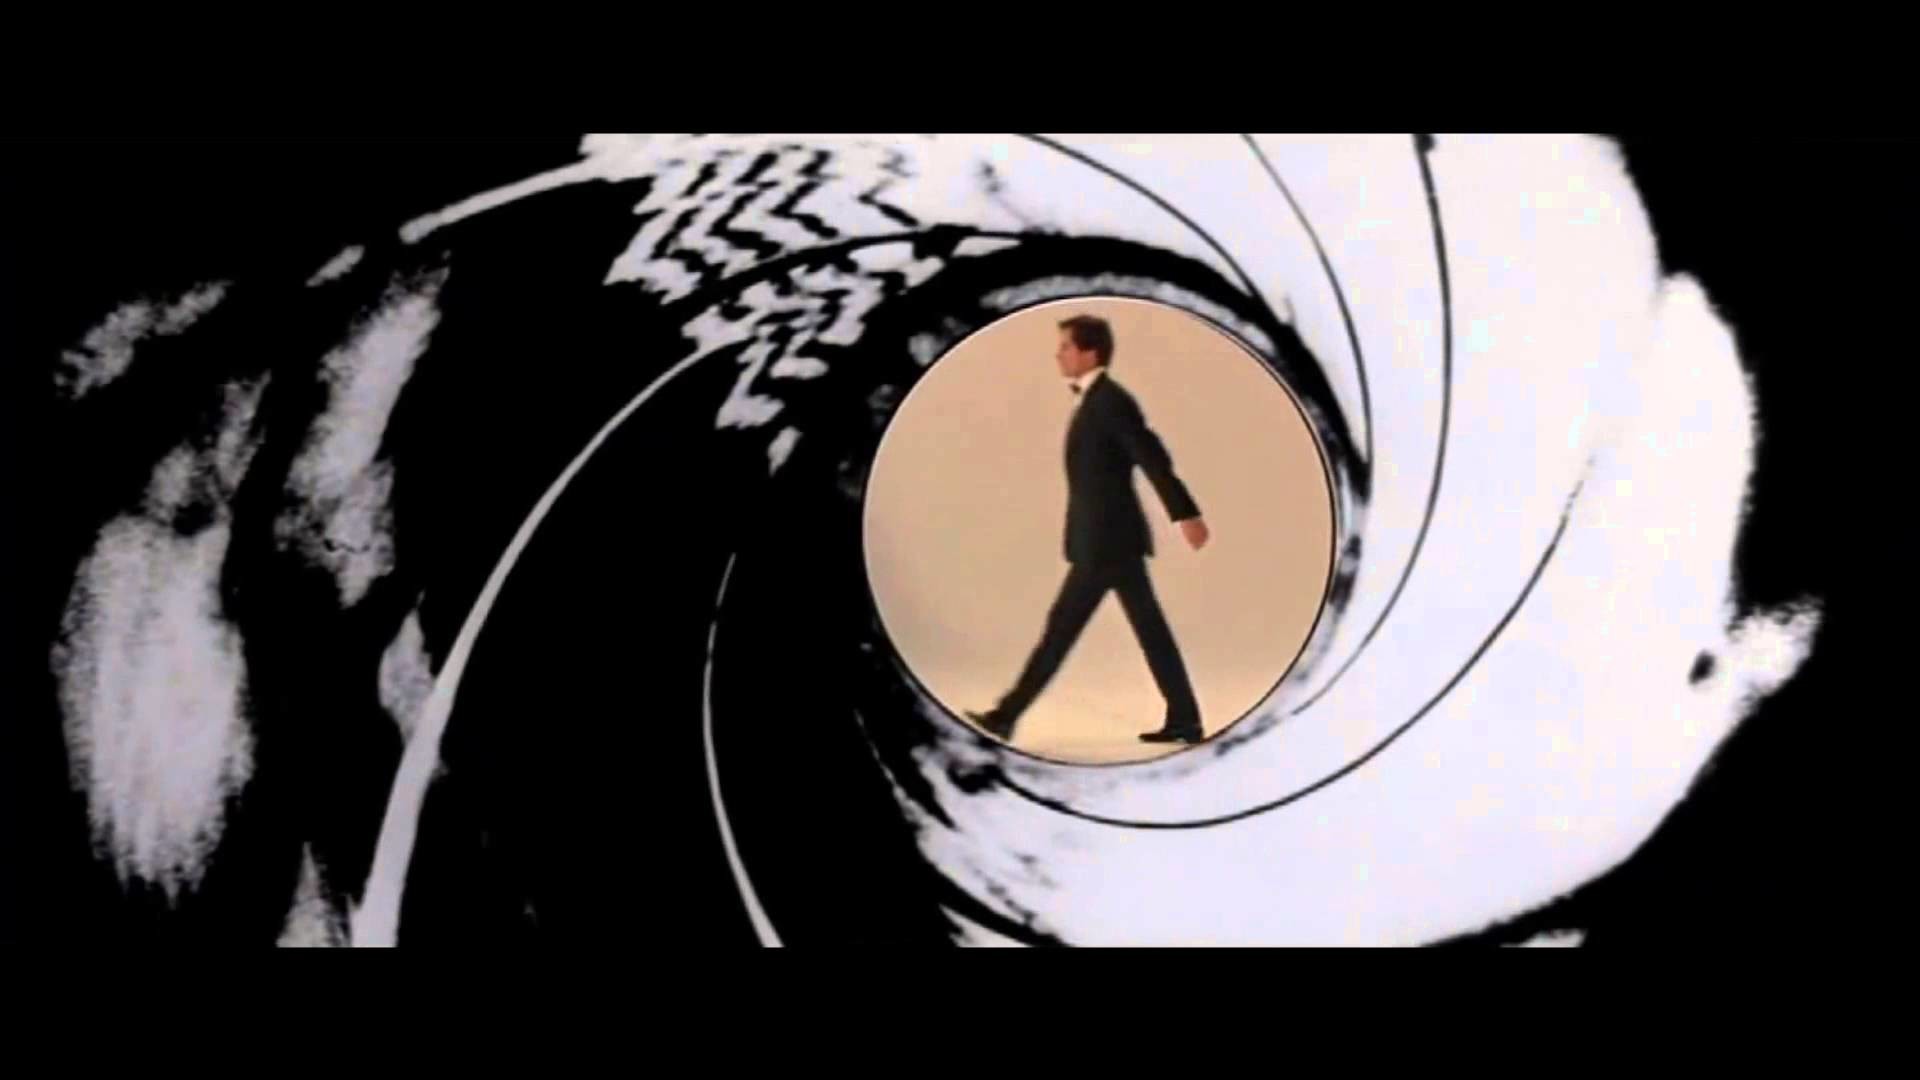 1920x1080 James Bond 007 [1989] License to Kill GunBarrel Sequence